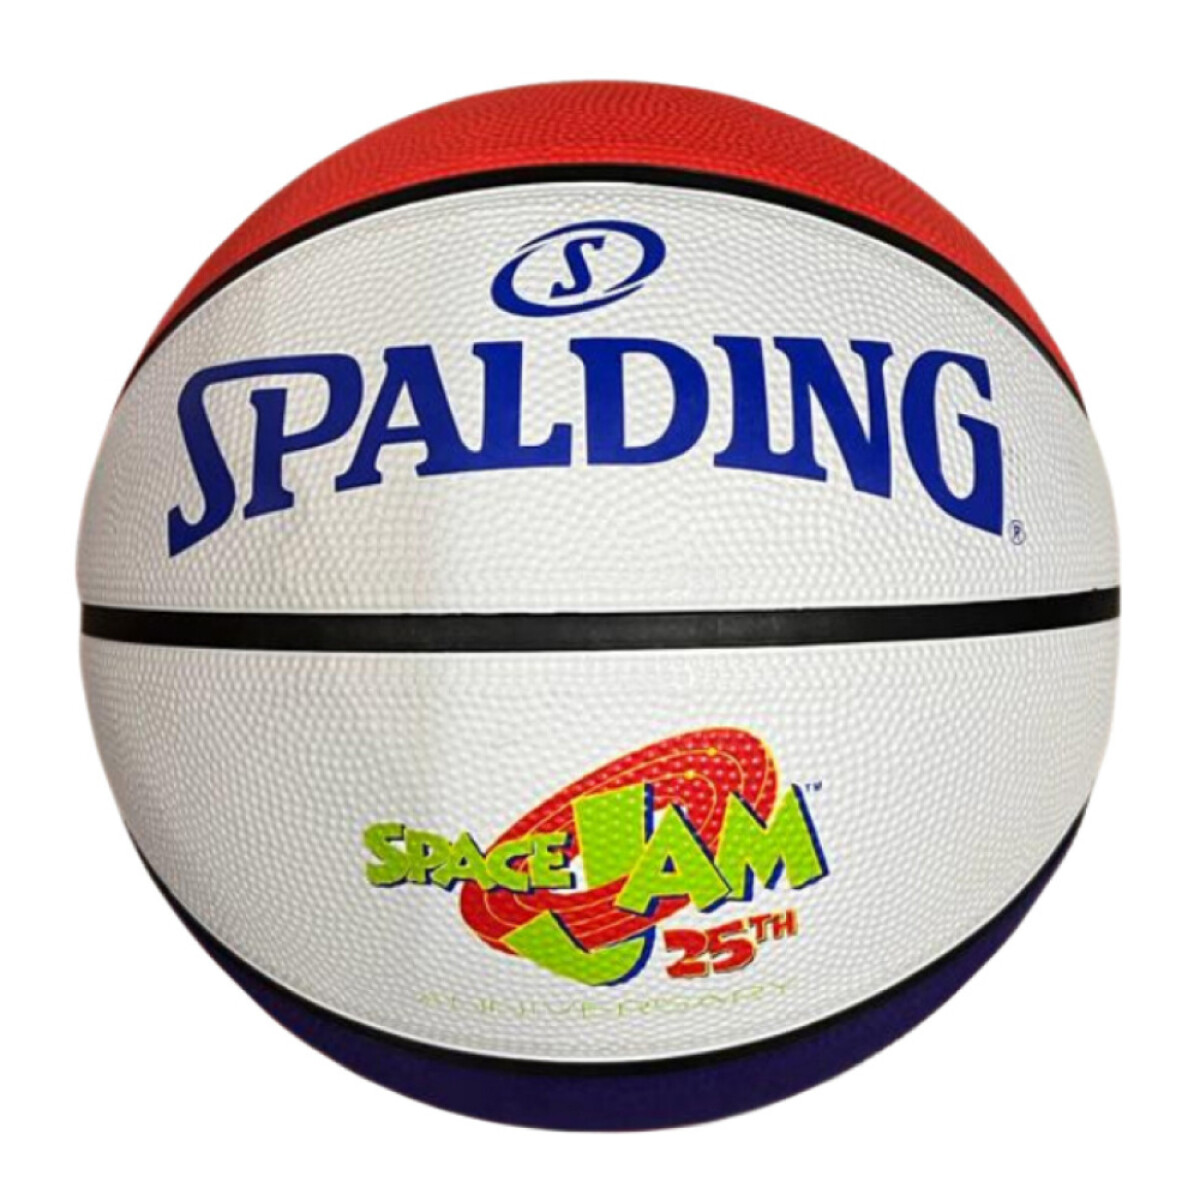 Pelota Basket Spalding Profesional - Space Jam 25th Anniversary Nº7 